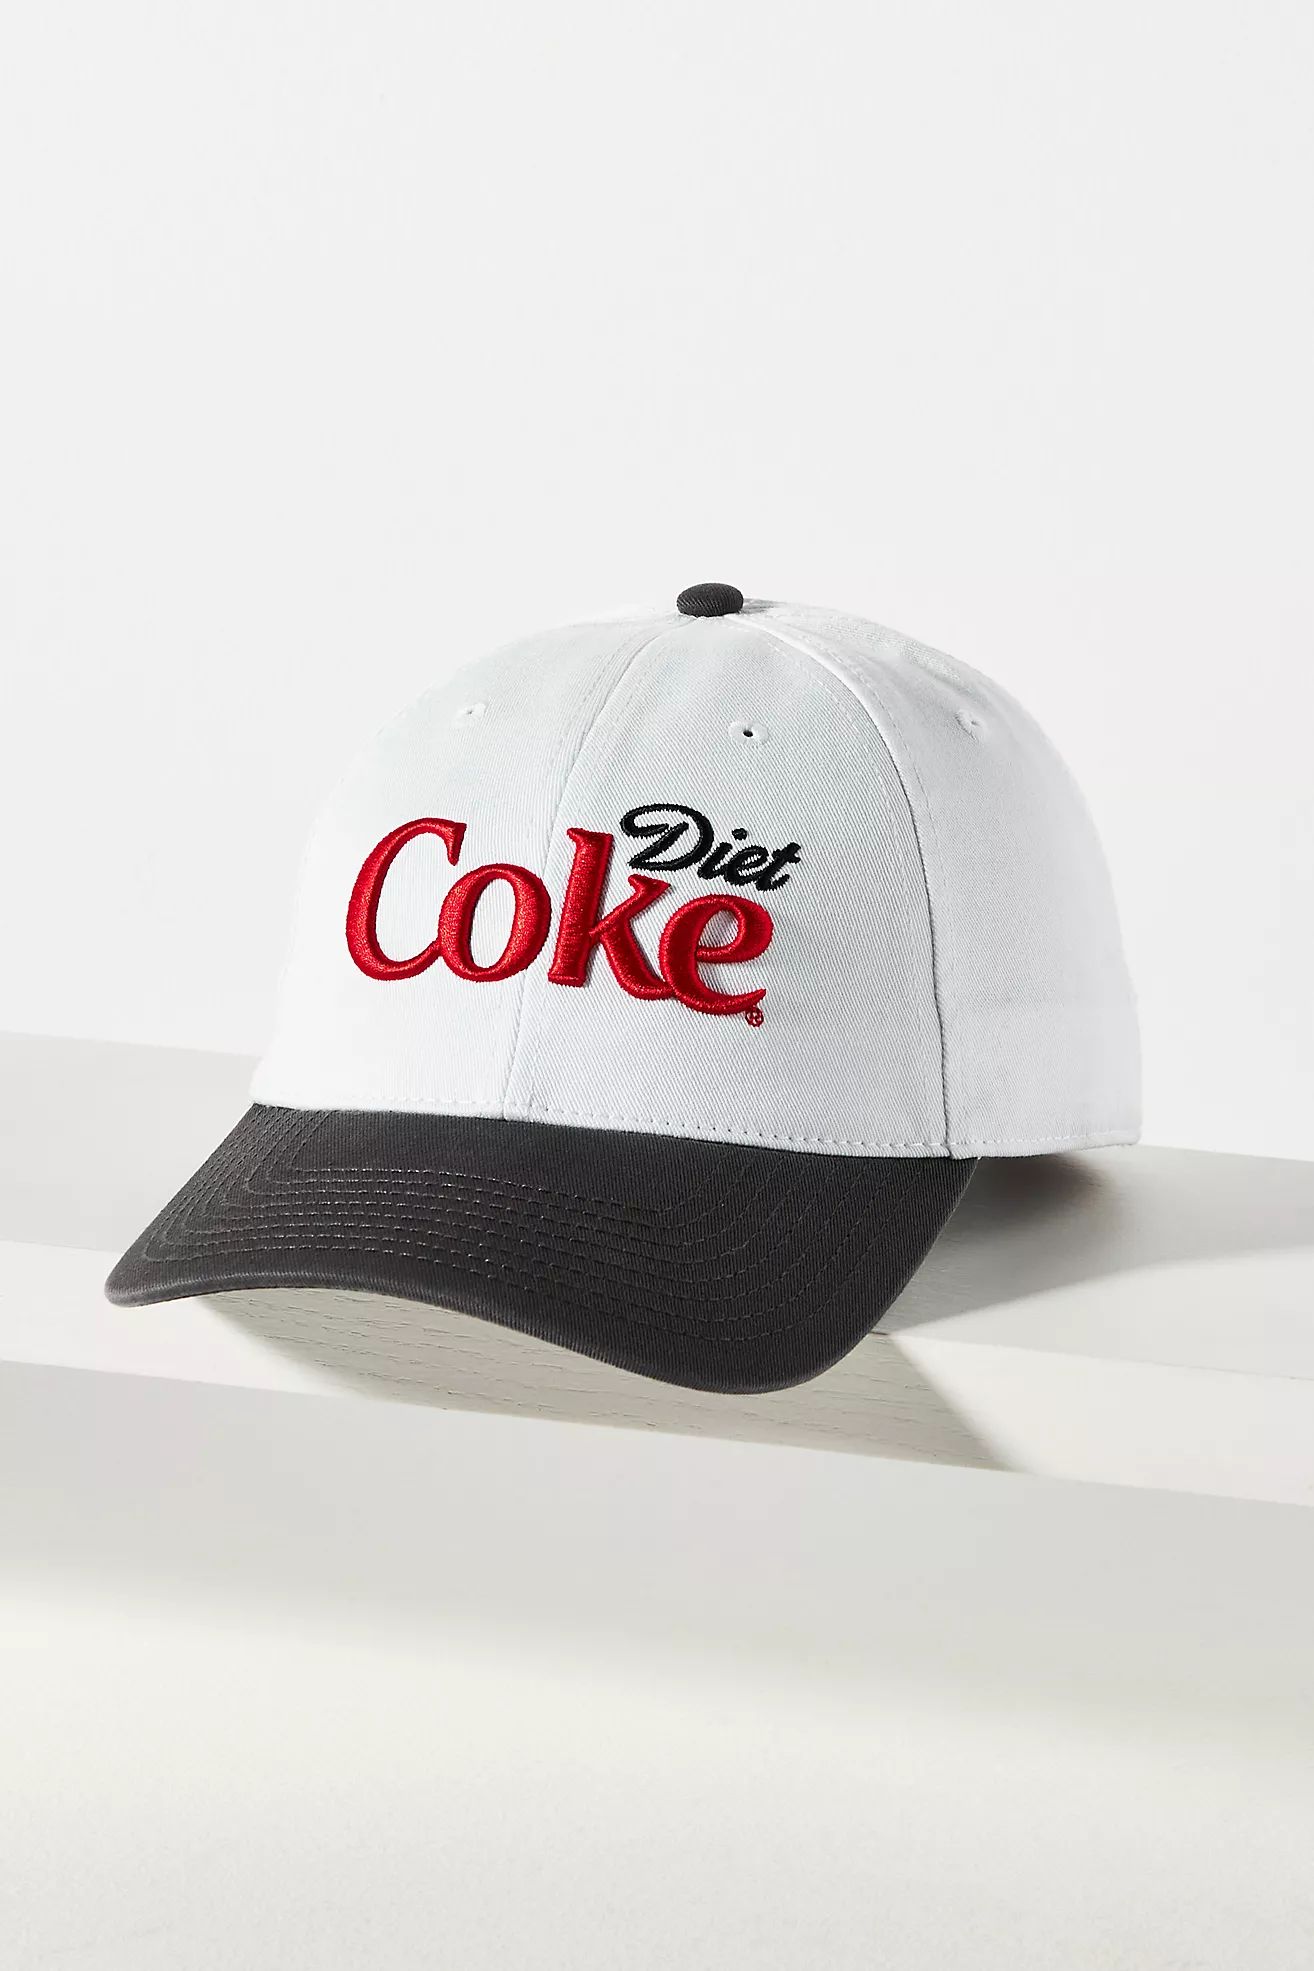 American Needle Diet Coke Baseball Cap | Anthropologie (US)